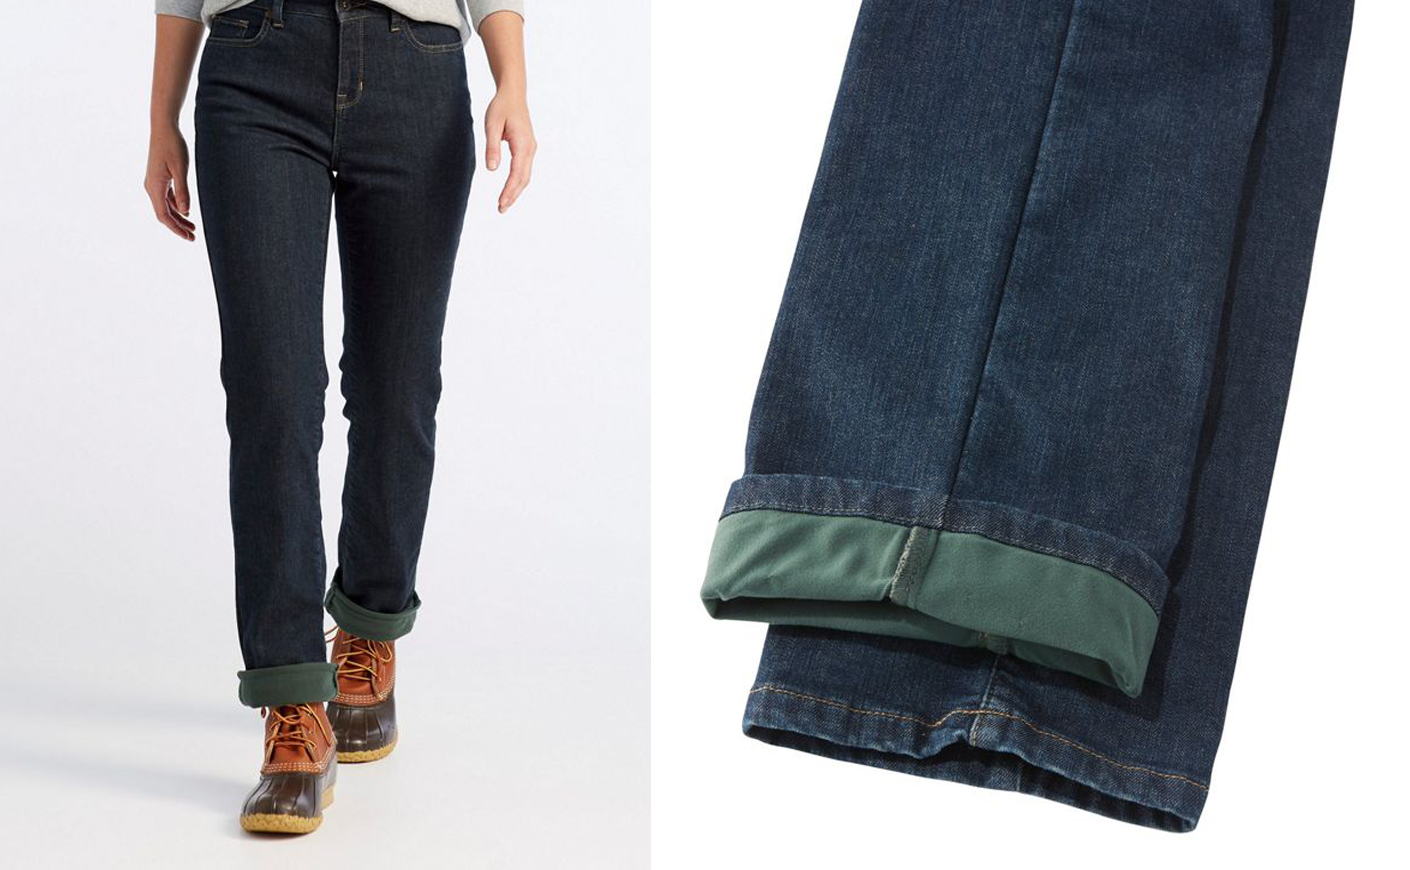 L.L. Bean fleece-lined jeans